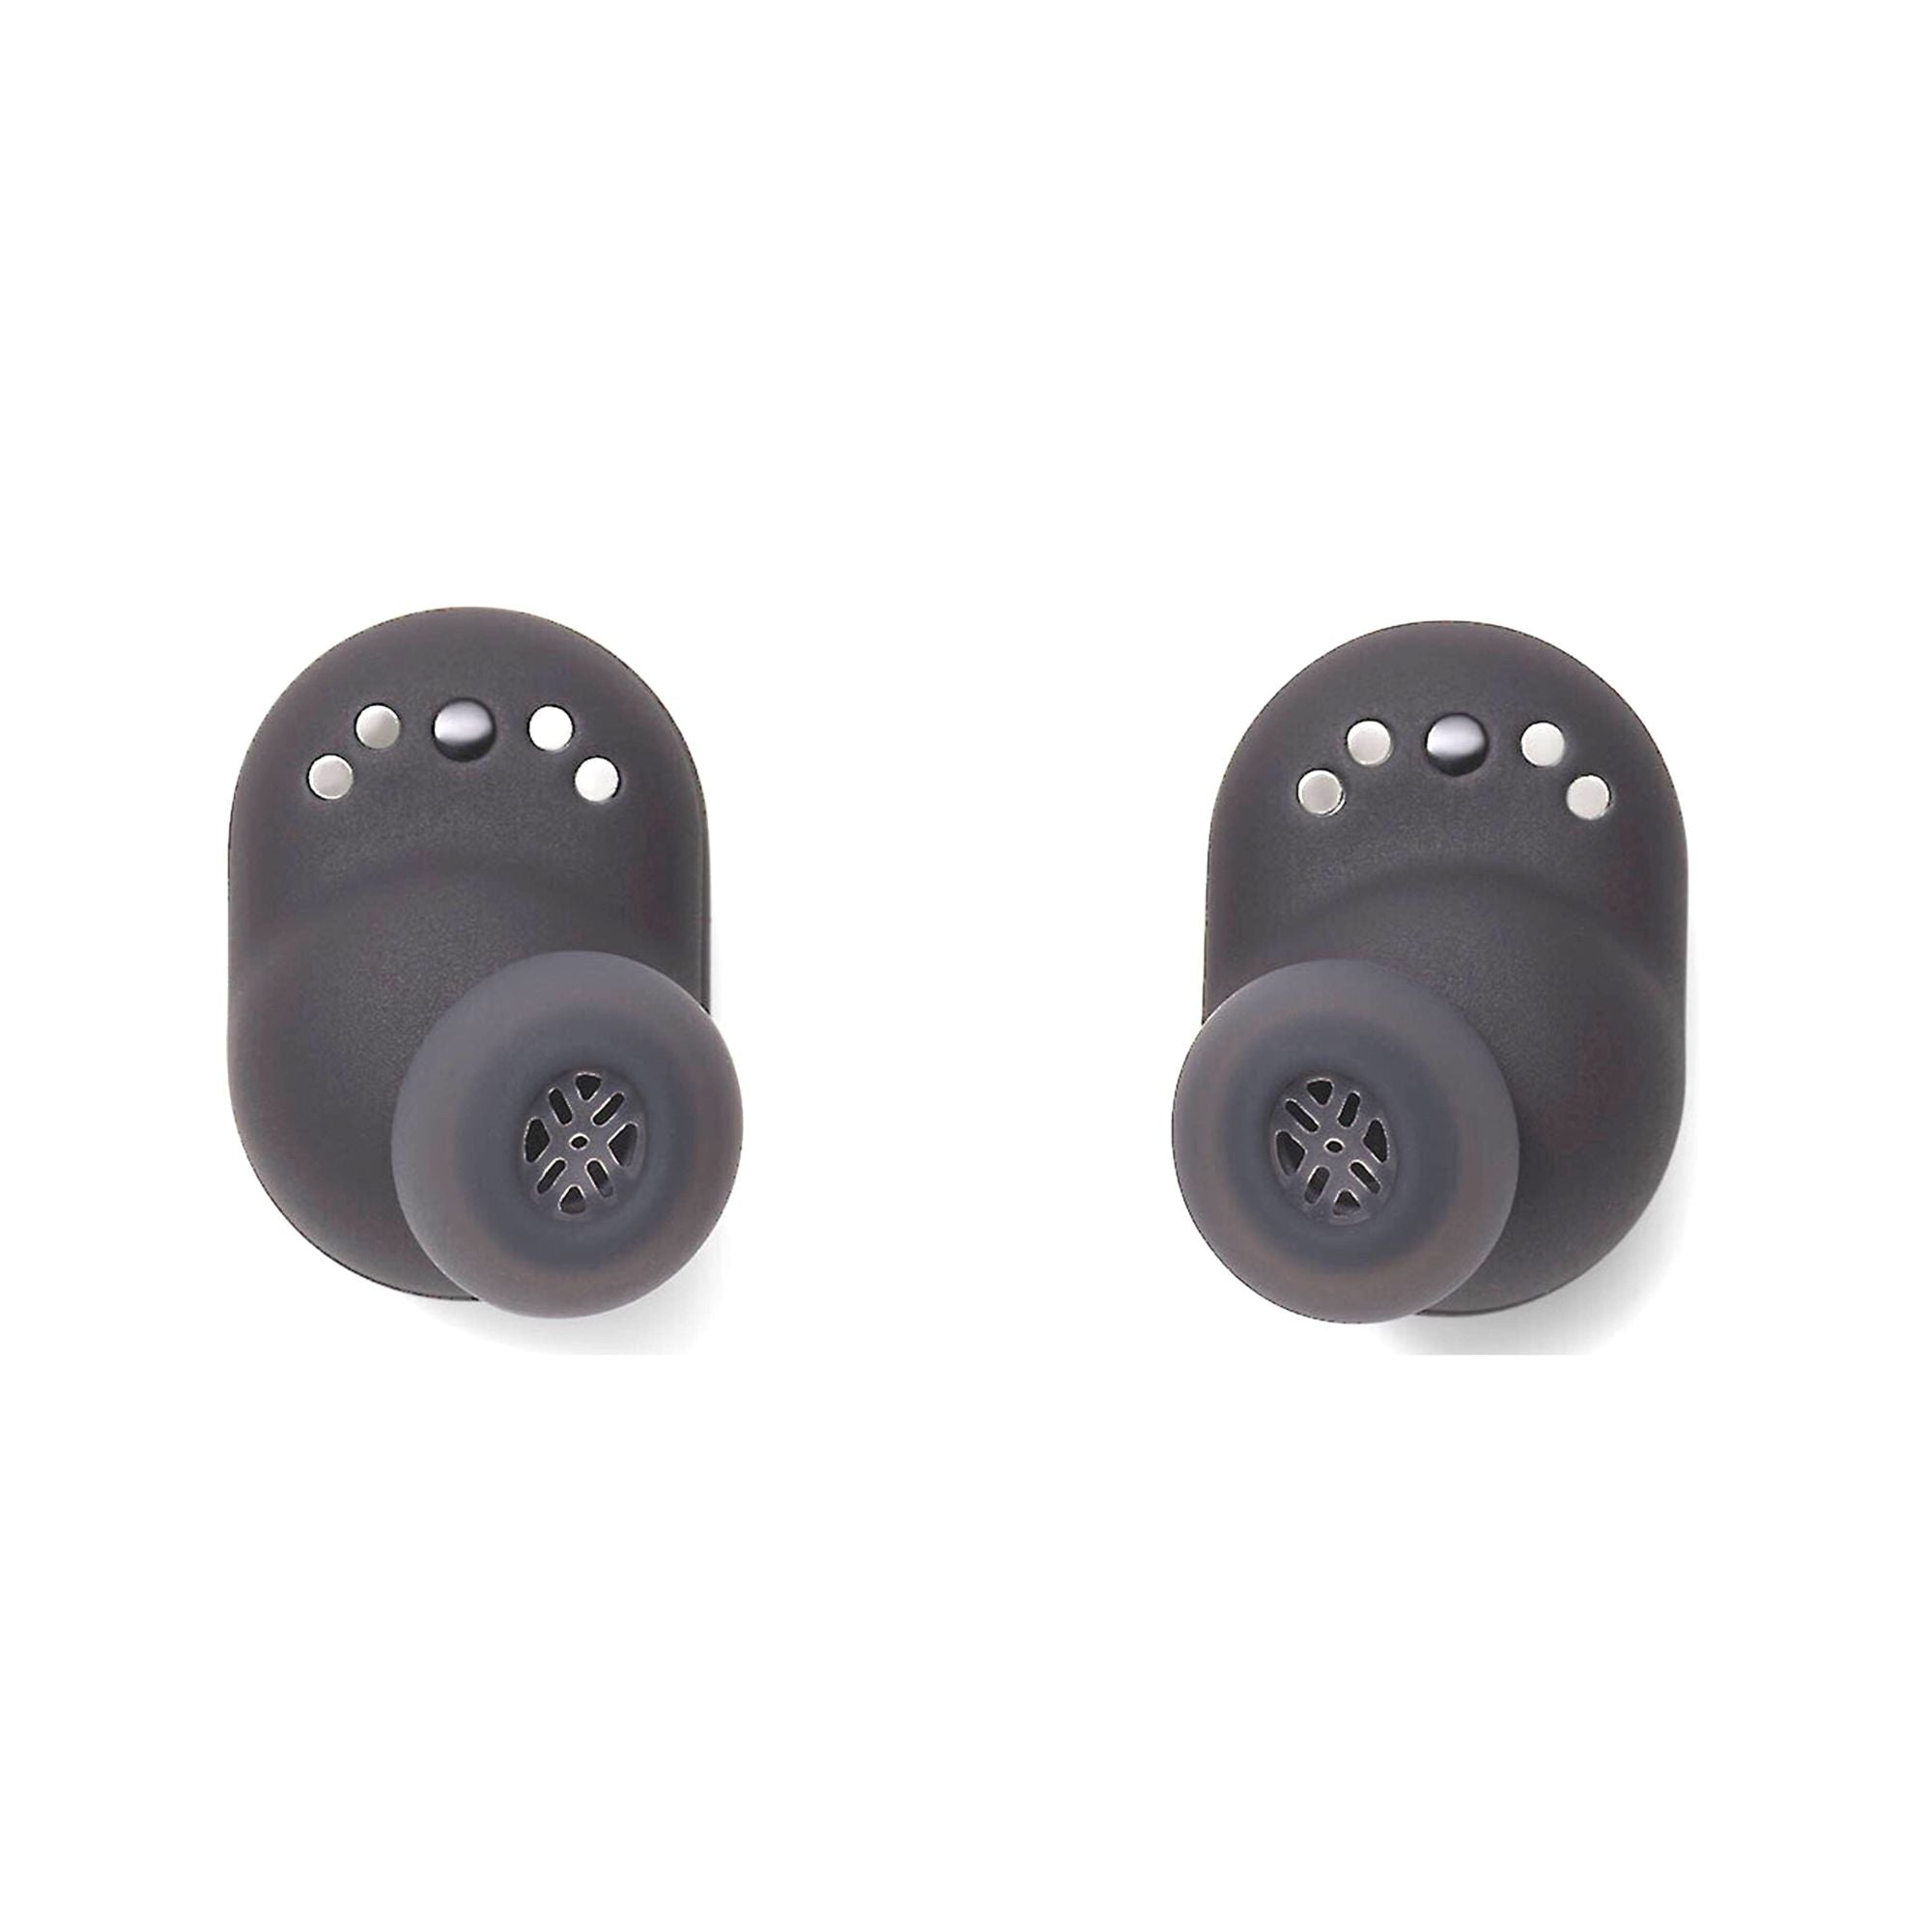 Devialet Gemini II - True wireless earbuds with adjustable noise-canceling, Devialet, Earbuds - AVStore.in